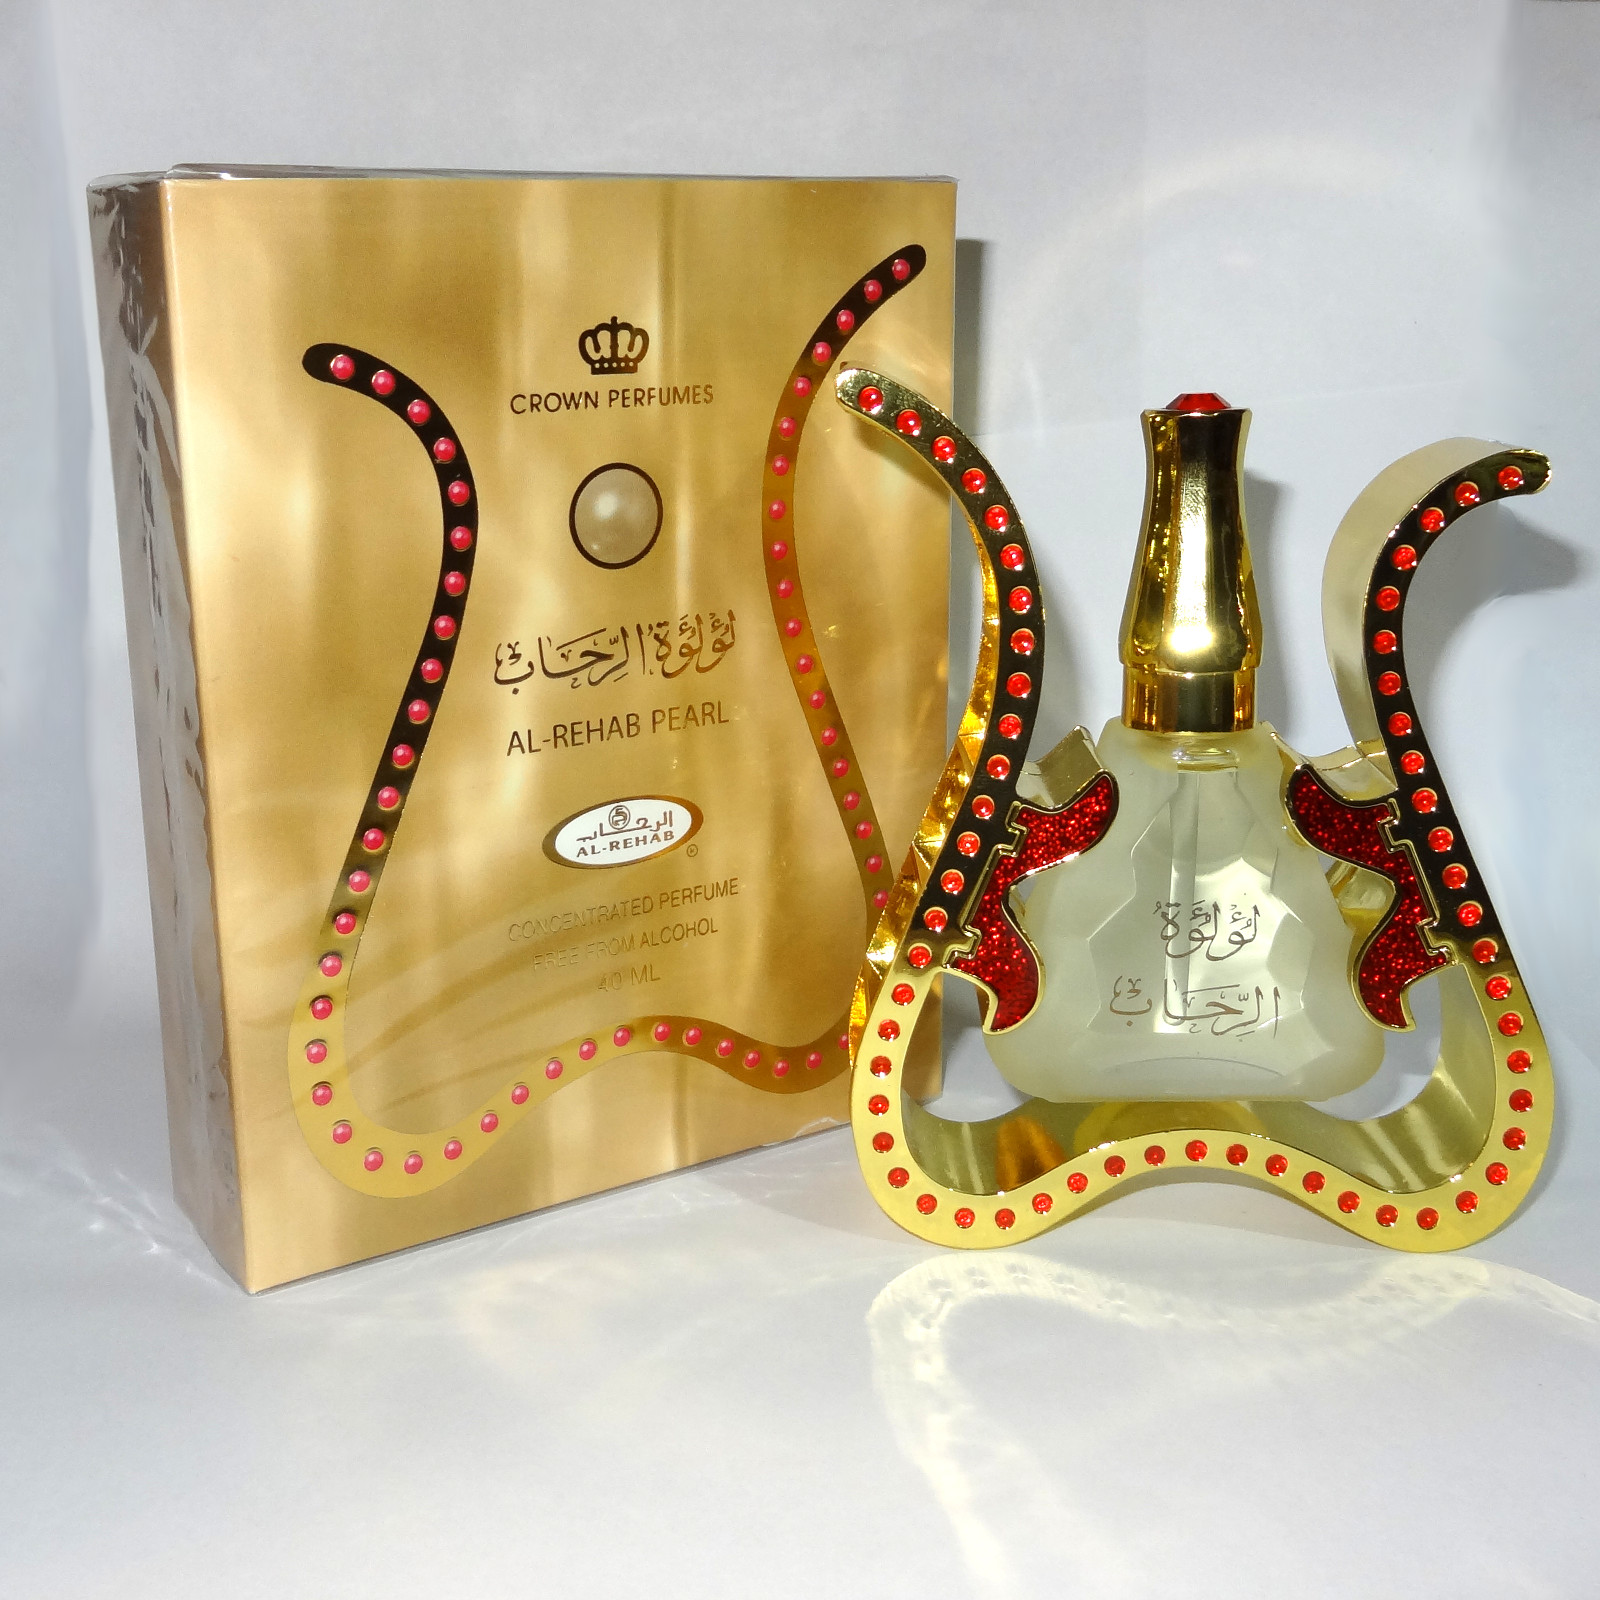 Духи pearl. Pearl / жемчуг - al Rehab Perfumes, 40 мл. Жемчуг Аль Рехаб 40 мл. Арабские духи женские Пиарл. Bahrain Pearl, от al Rehab.